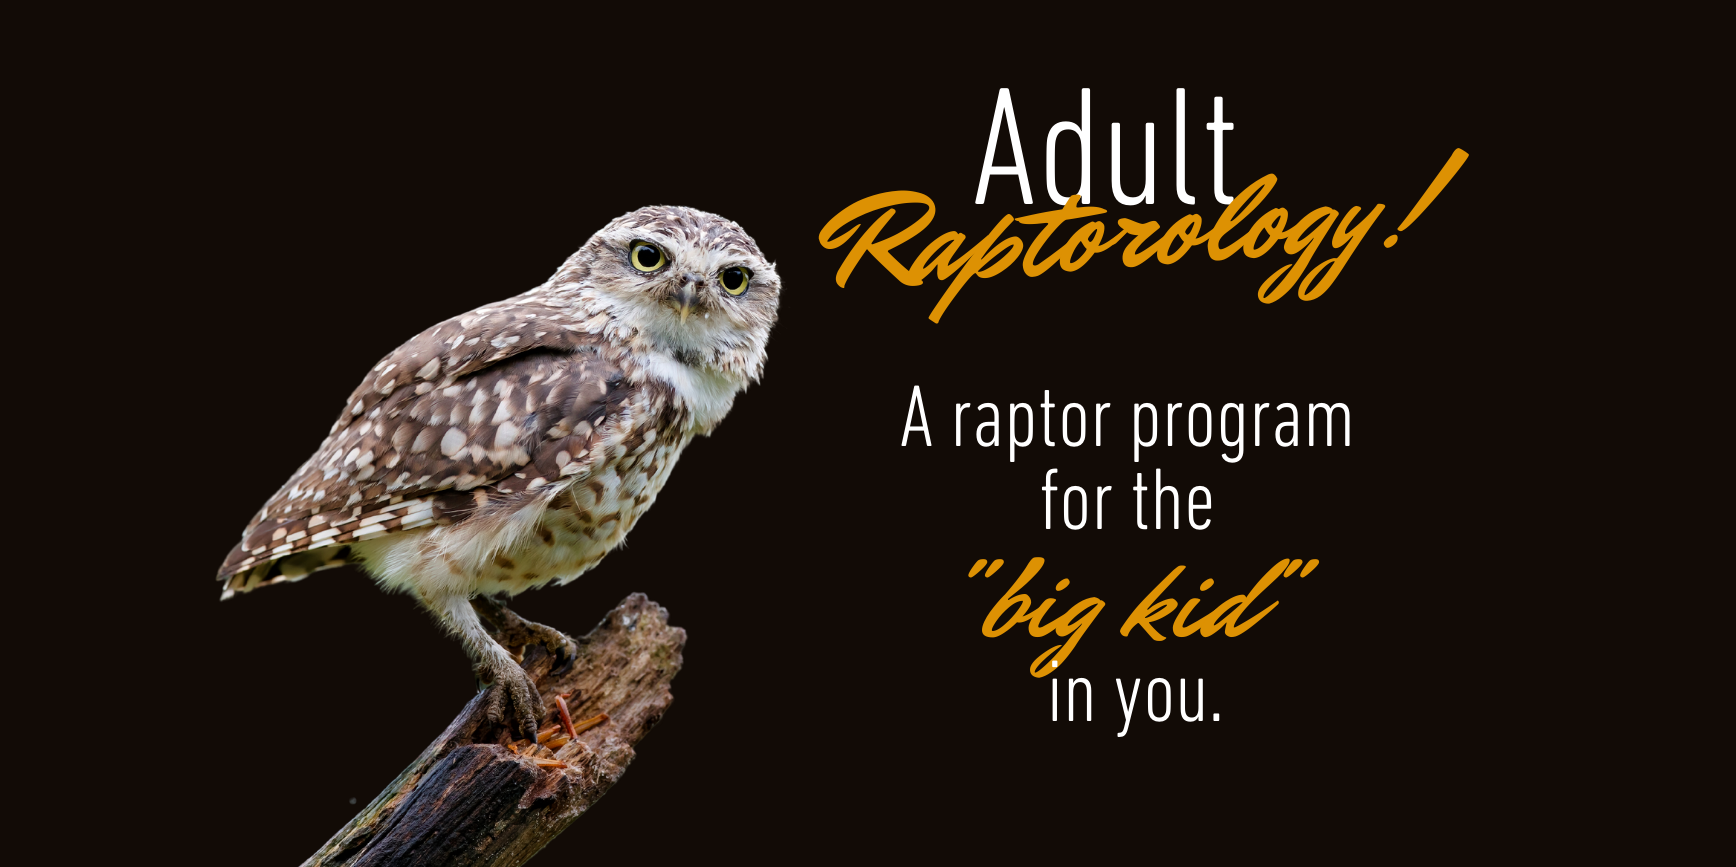 Adult Raptorology promotional image